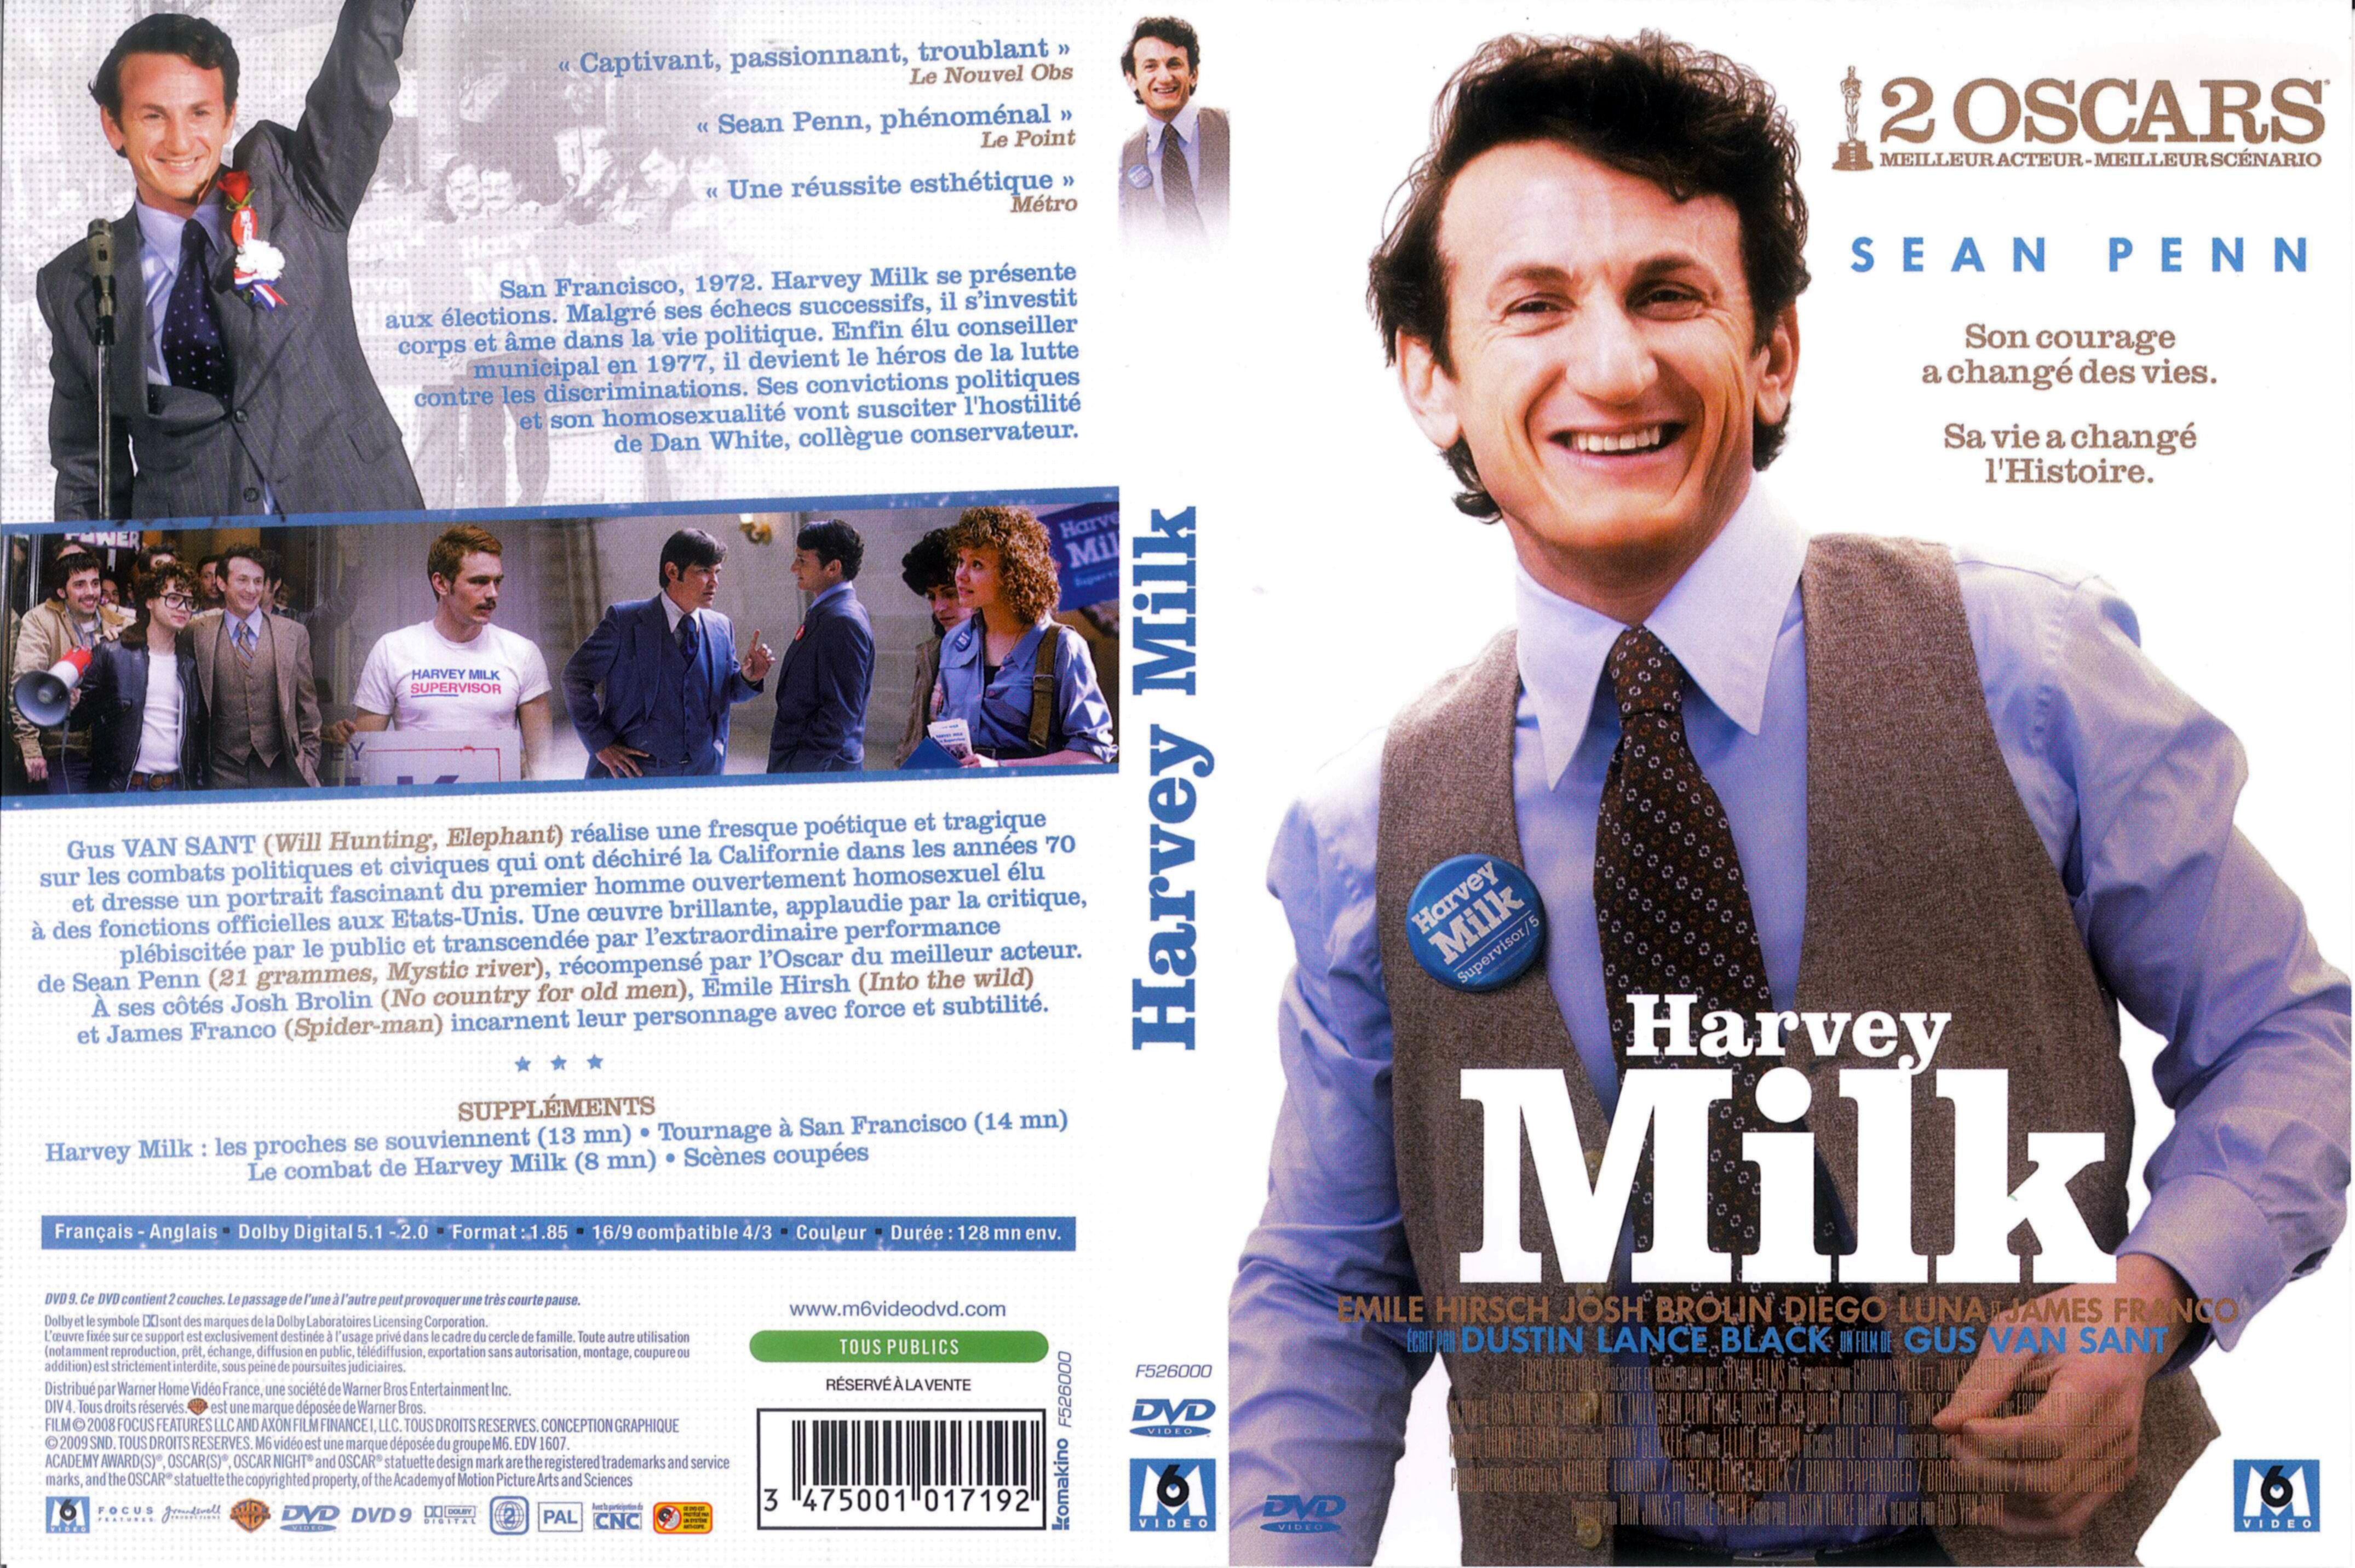 Jaquette DVD Harvey Milk